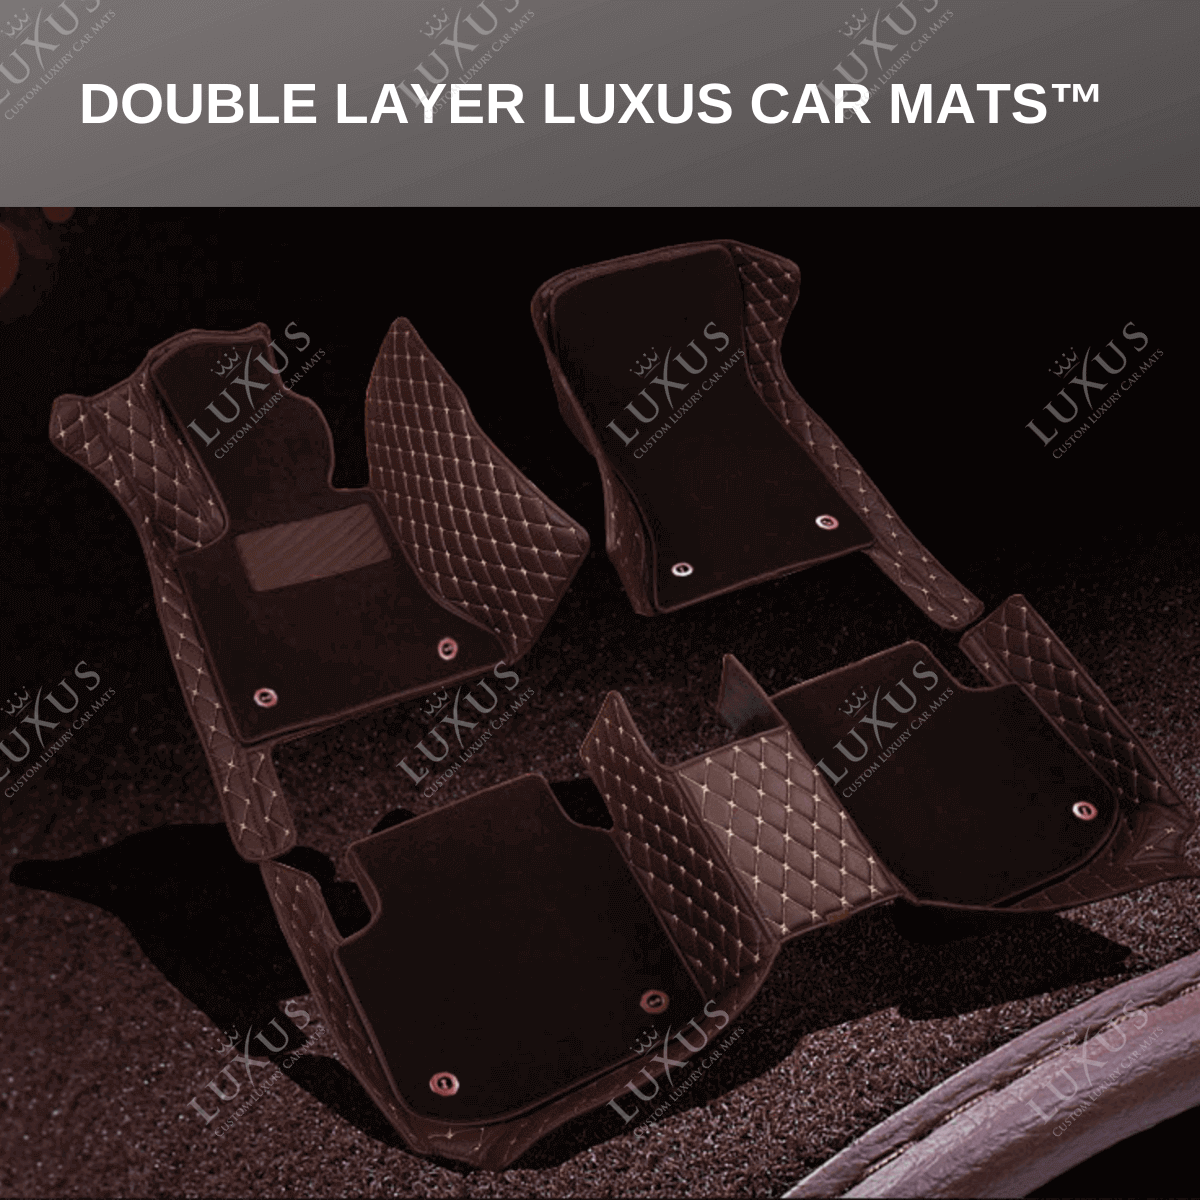 Light Grey Diamond Base & Brown Top Carpet Double Layer Luxury Car Mats Set